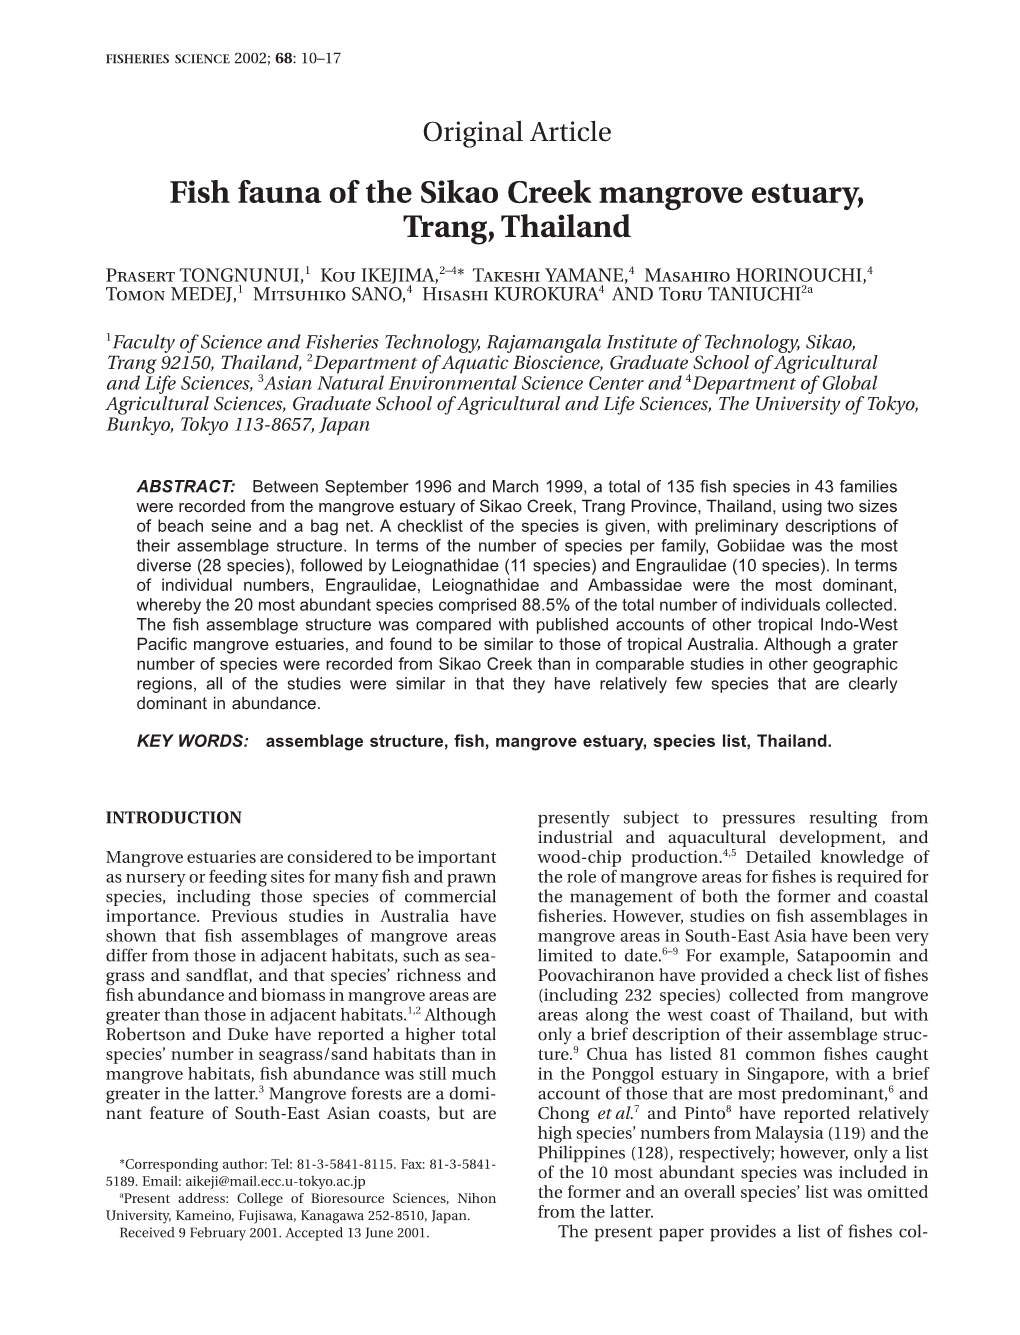 Fish Fauna of the Sikao Creek Mangrove Estuary, Trang, Thailand